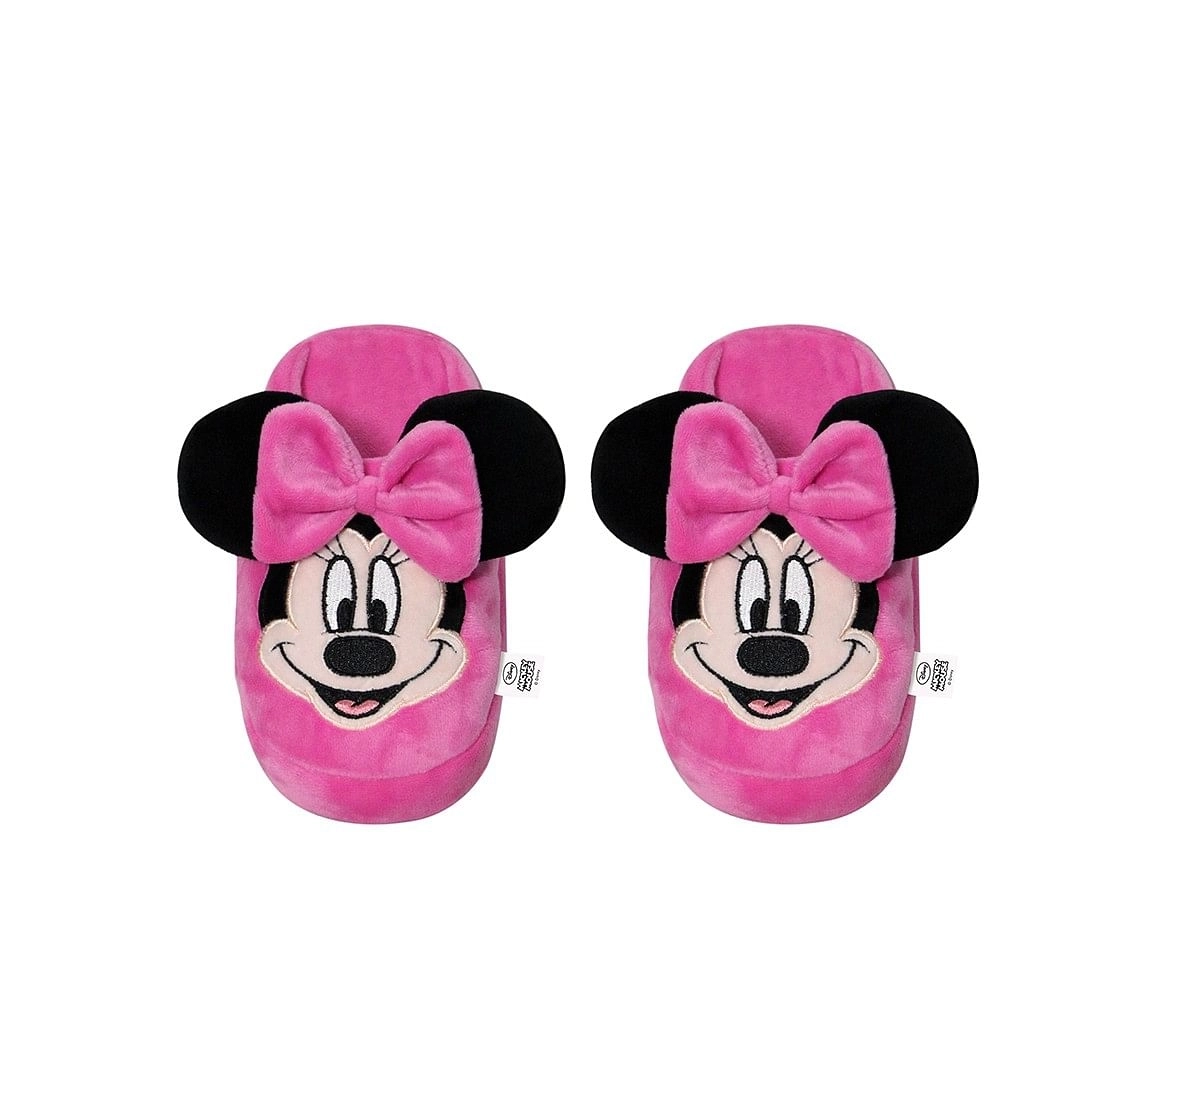 Funko Disney Minnie Flipflop Plush Accessories for Kids age 12M+ - 5 Cm 